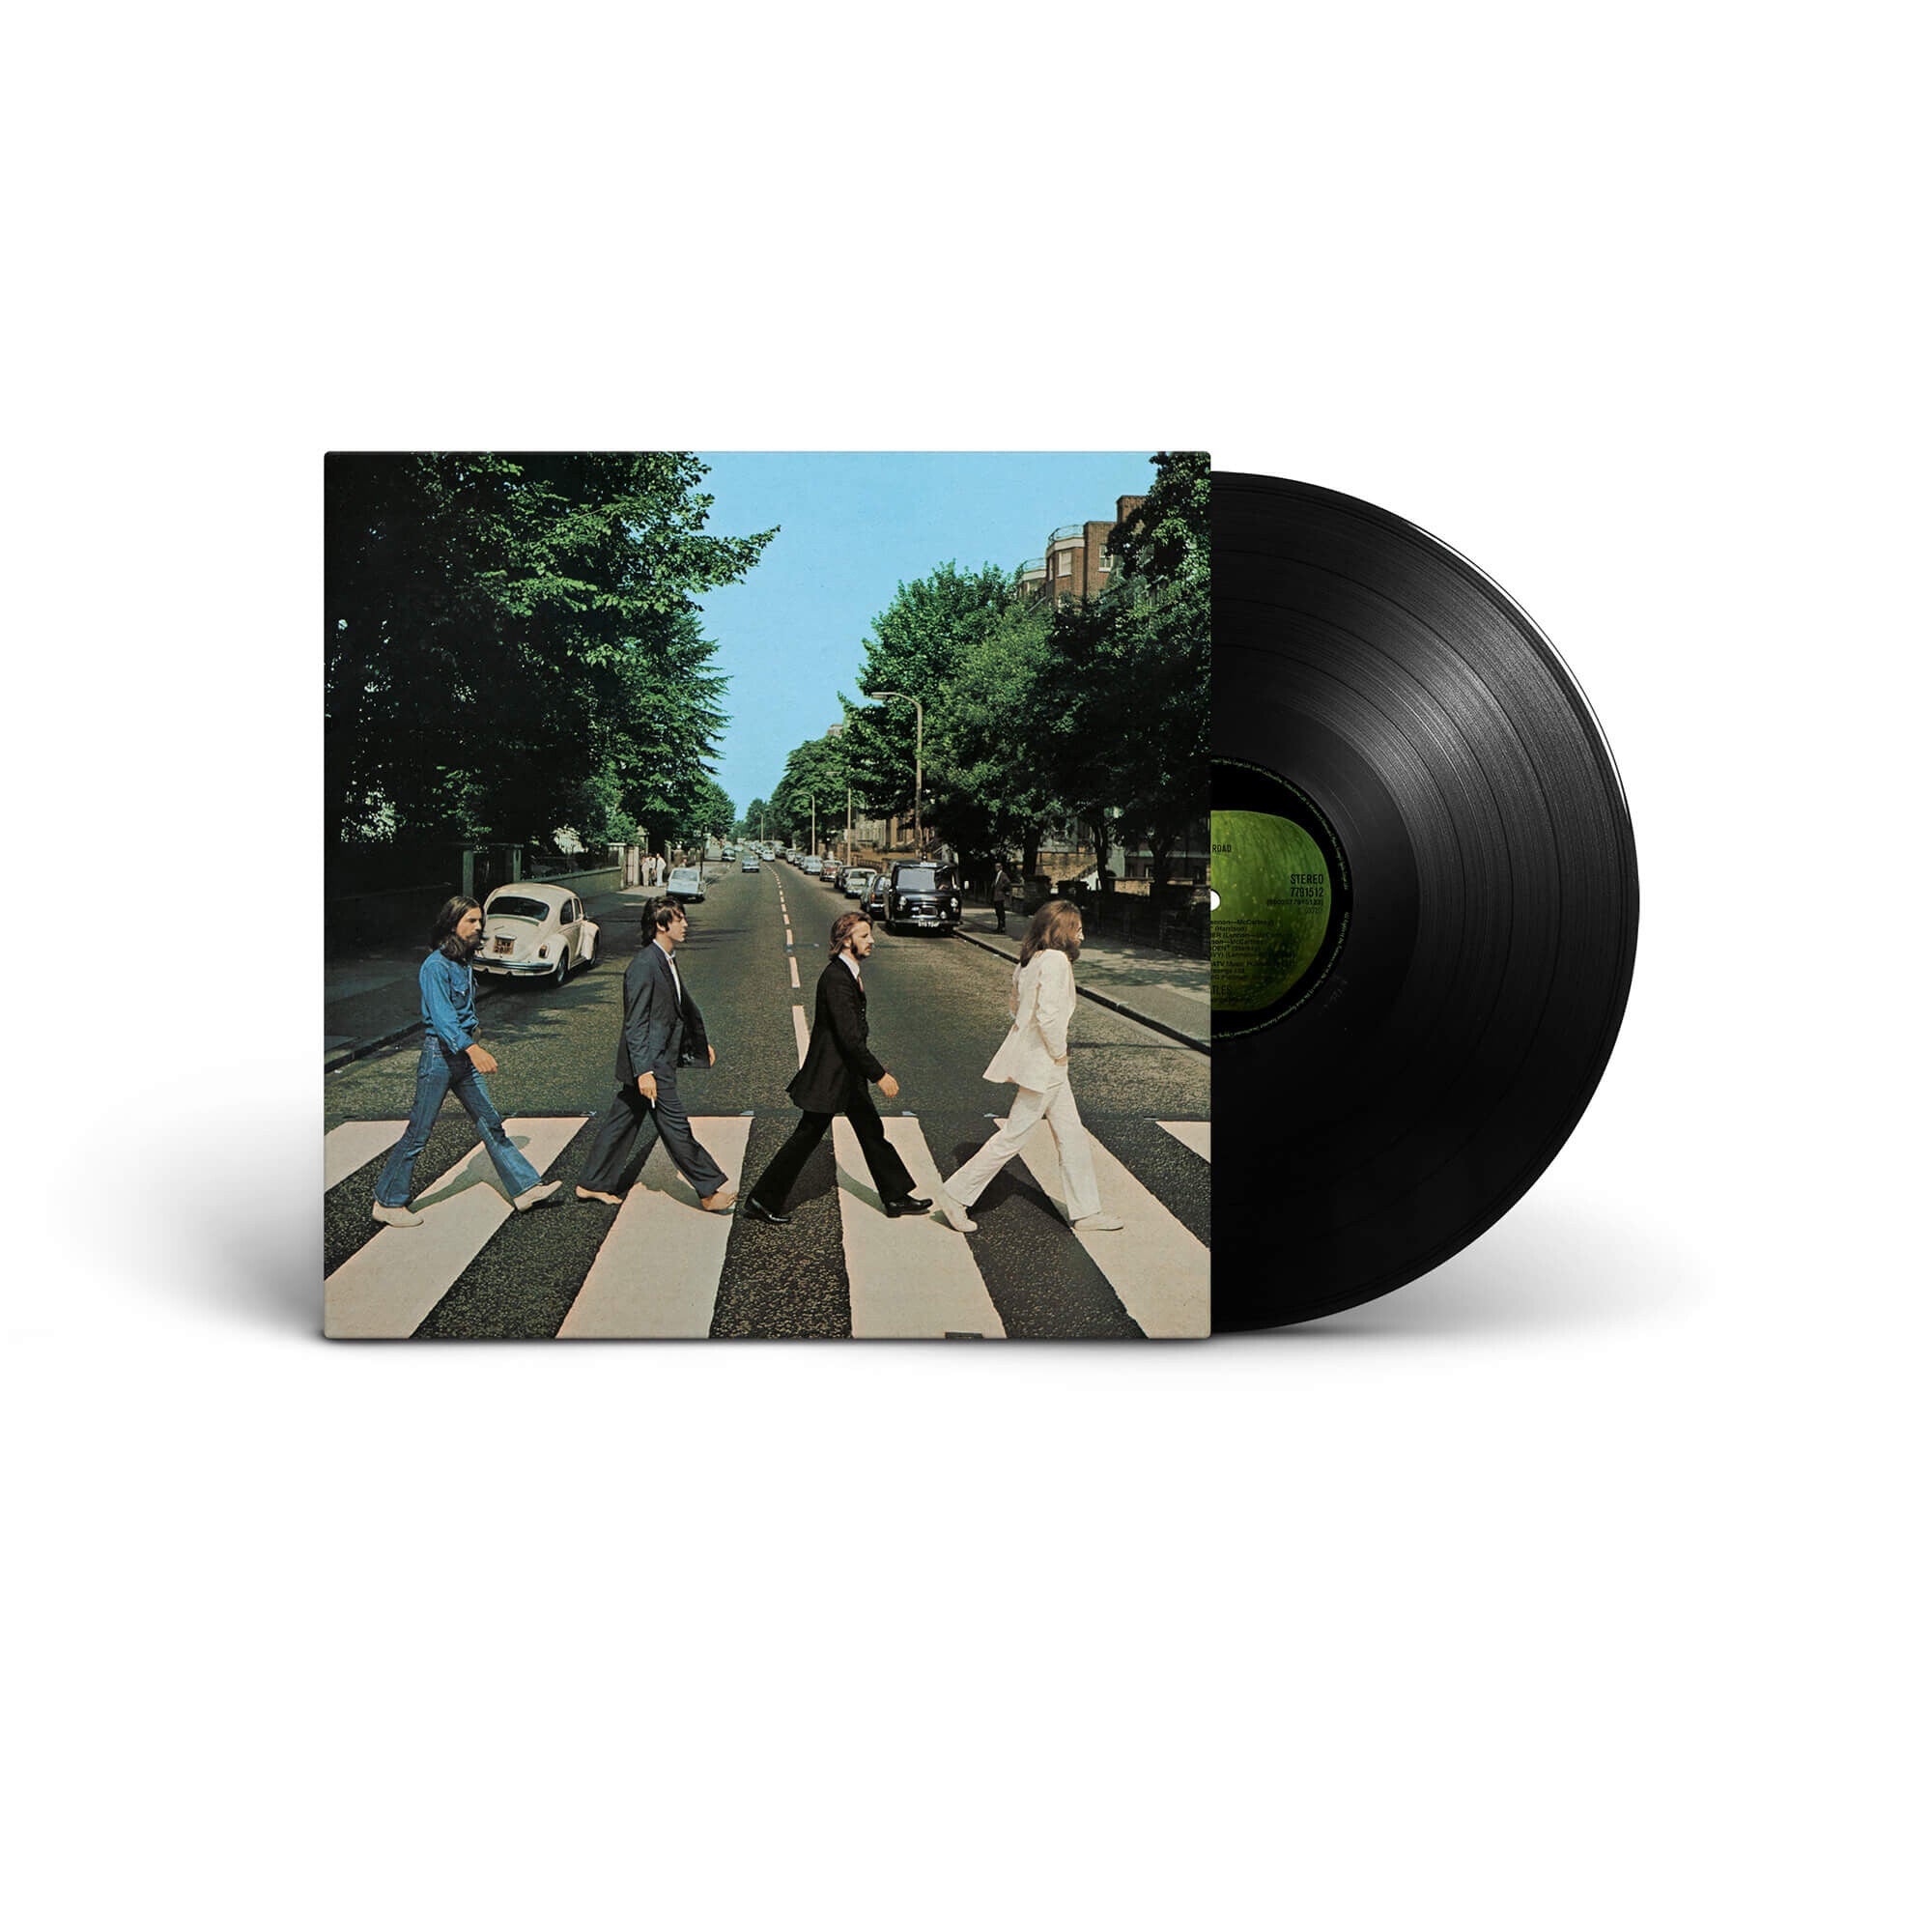 https://images.bravado.de/prod/product-assets/product-asset-data/beatles-the/the-beatles-international-1/products/130645/web/291983/image-thumb__291983__3000x3000_original/The-Beatles-Abbey-Road-Anniversary-Edition-1LP-Vinyl-130645-291983.jpg